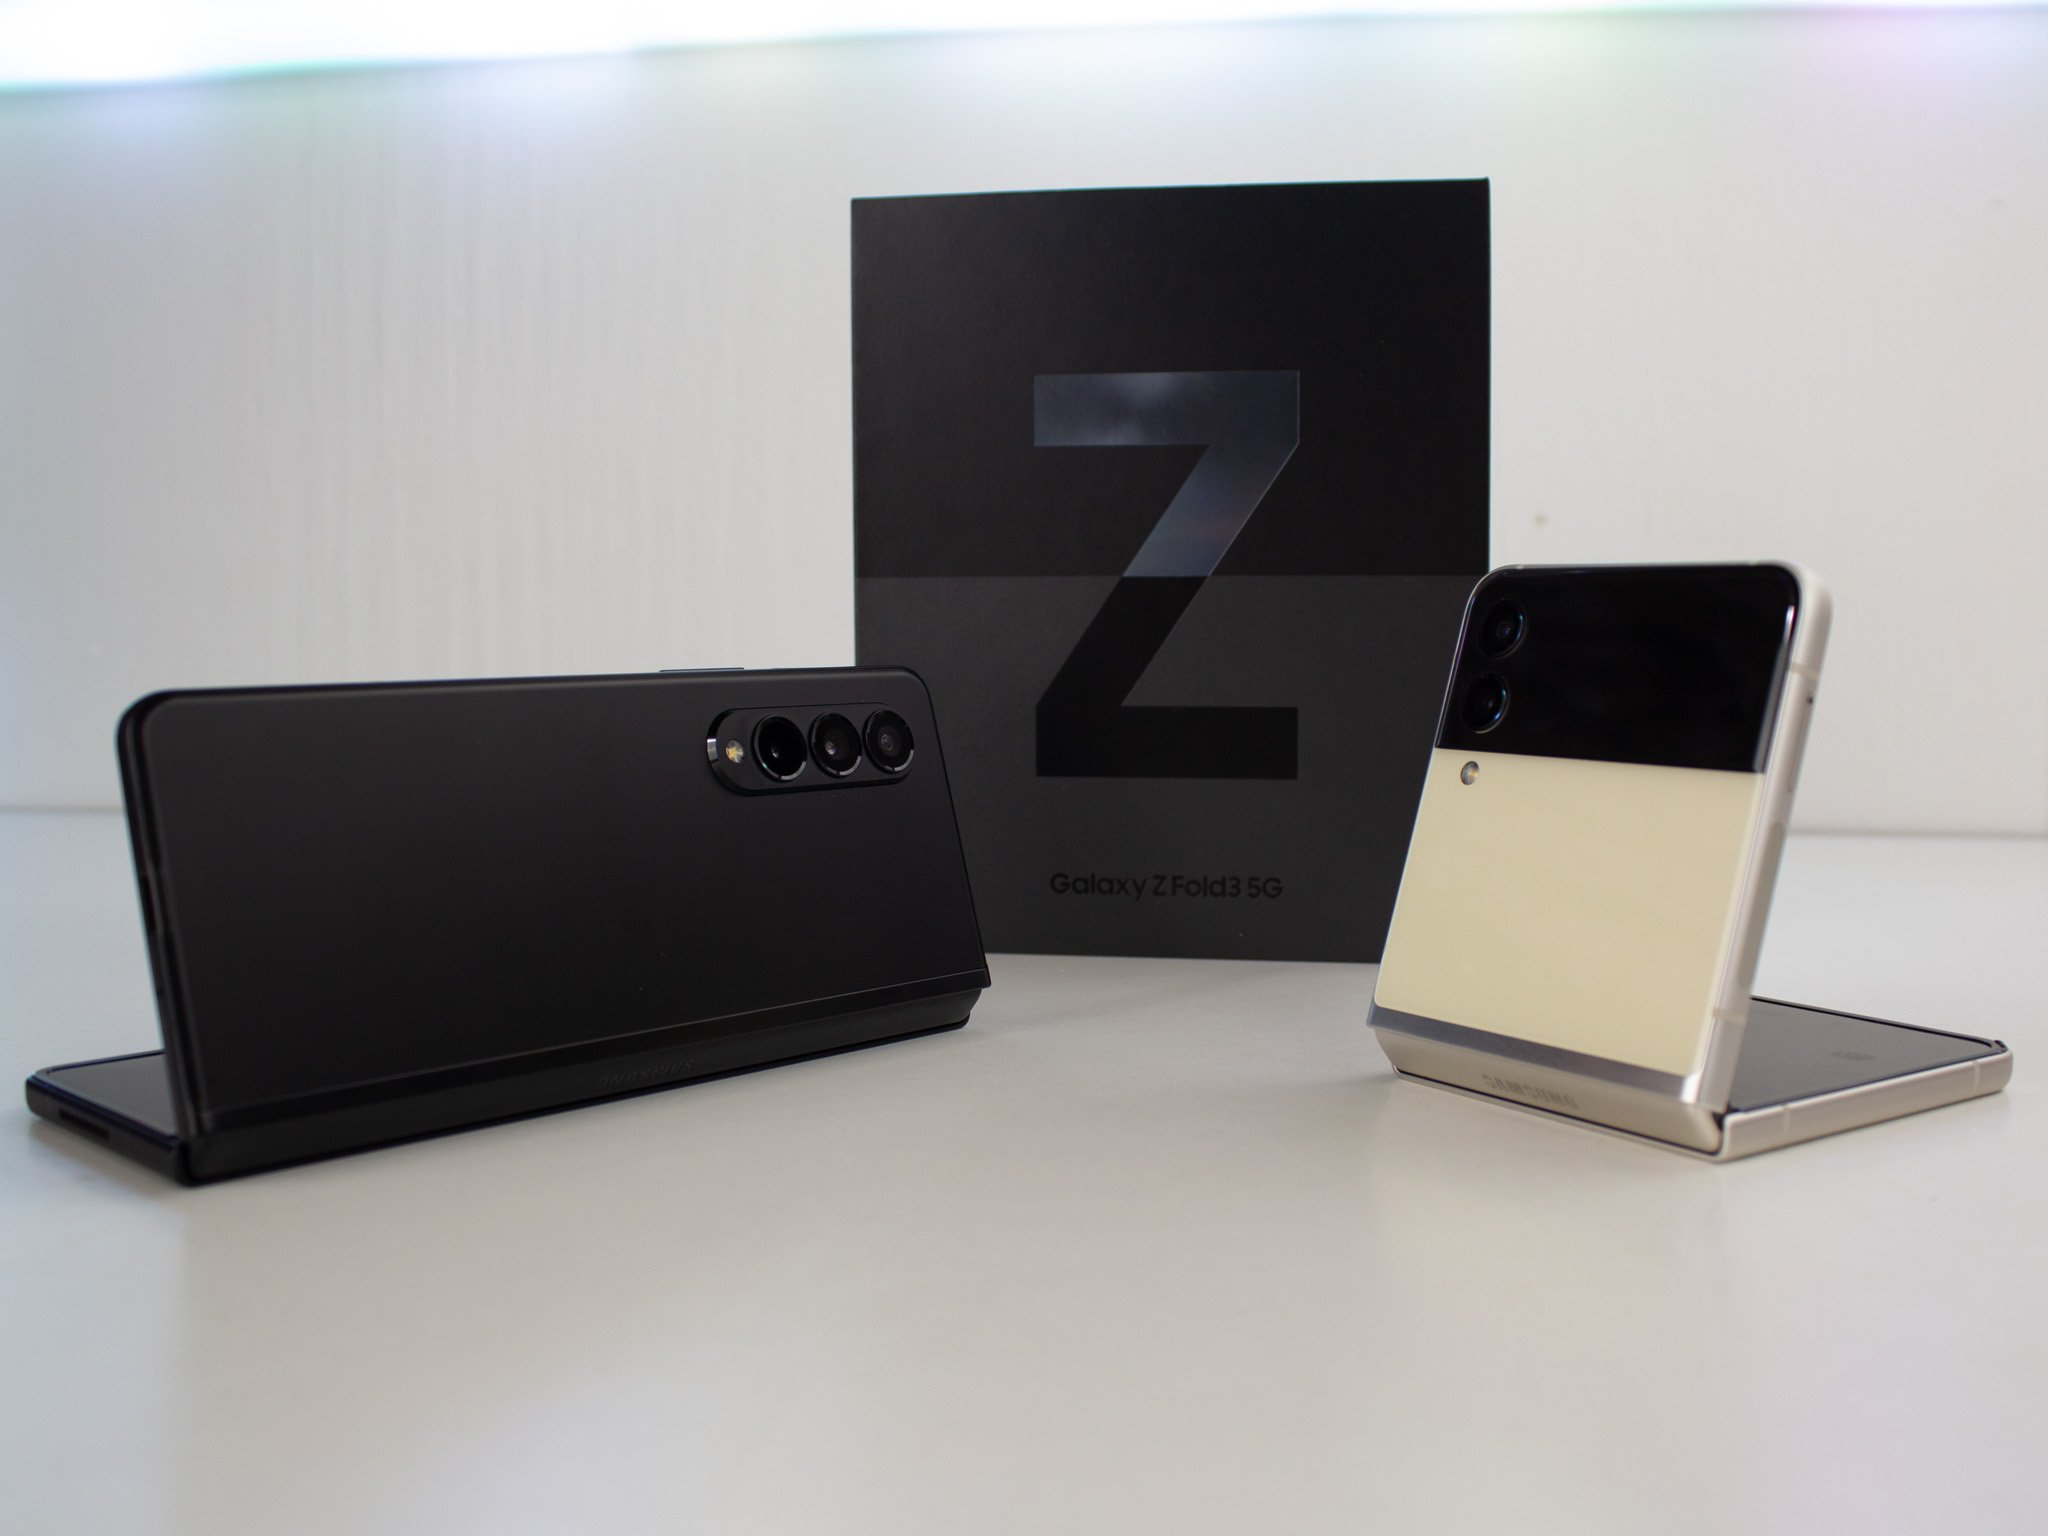 Samsung Galaxy Z Fold And Flip 3 With Box